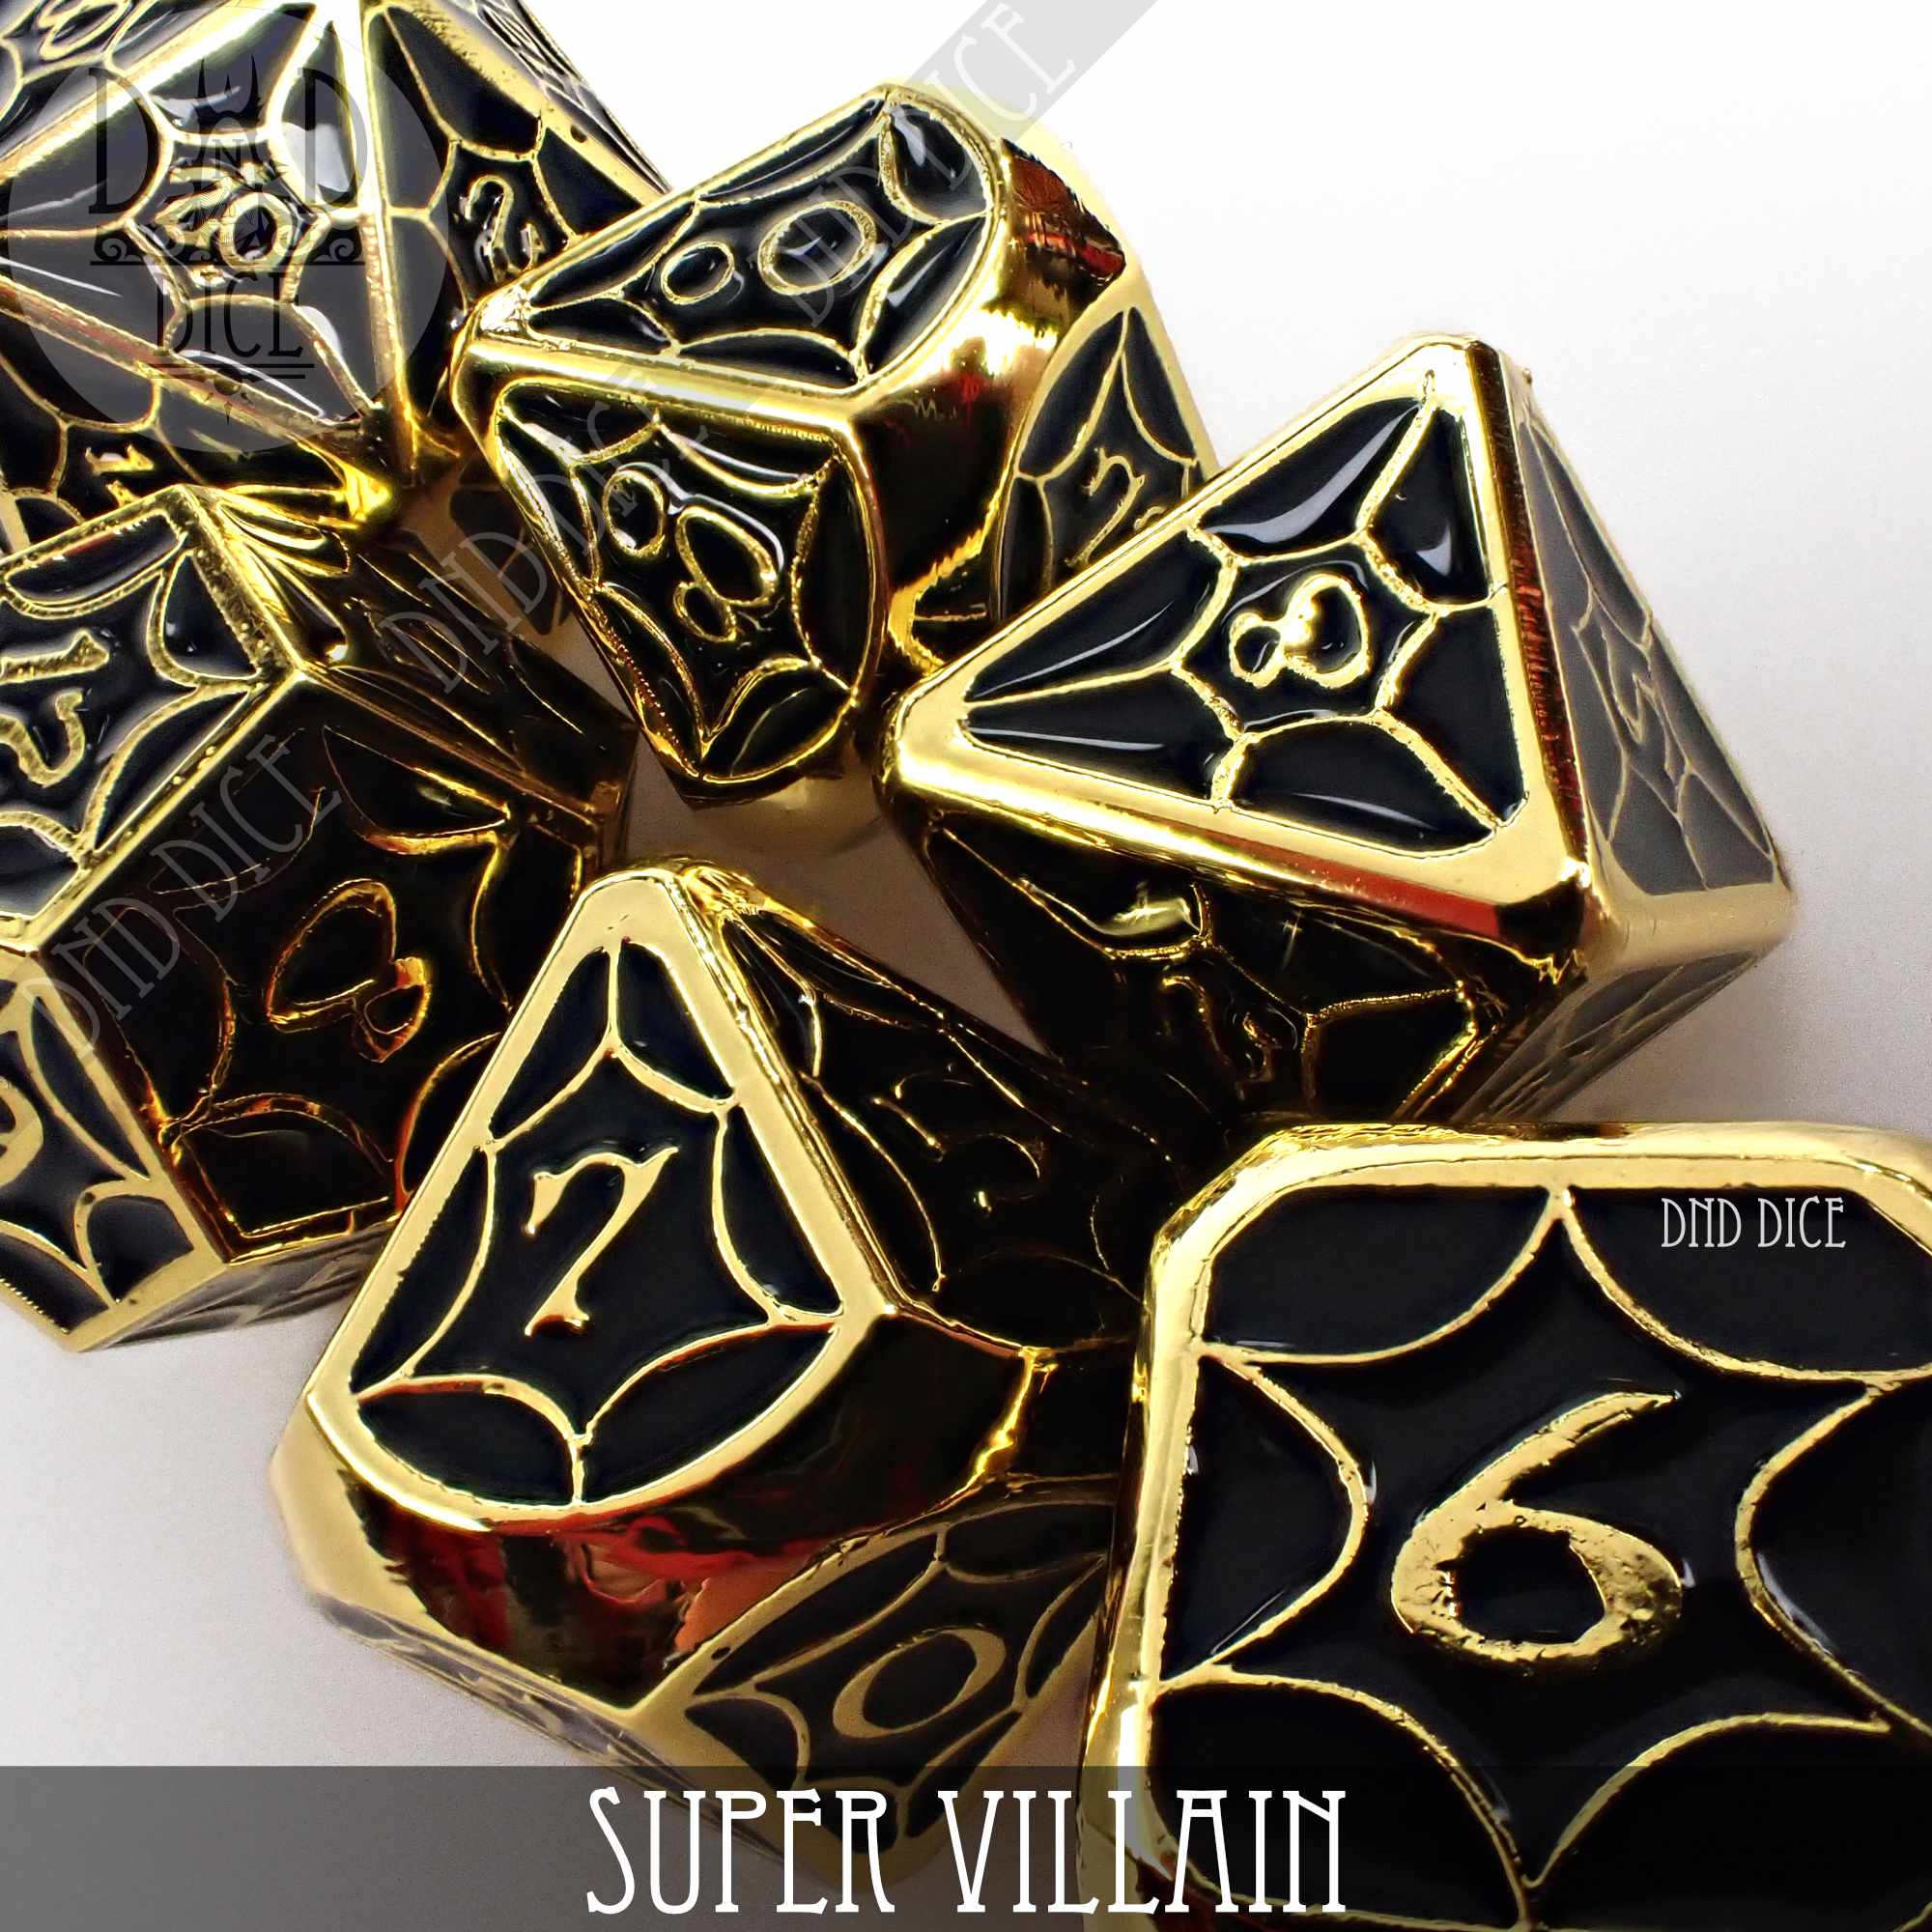 Super Villain (Metal)